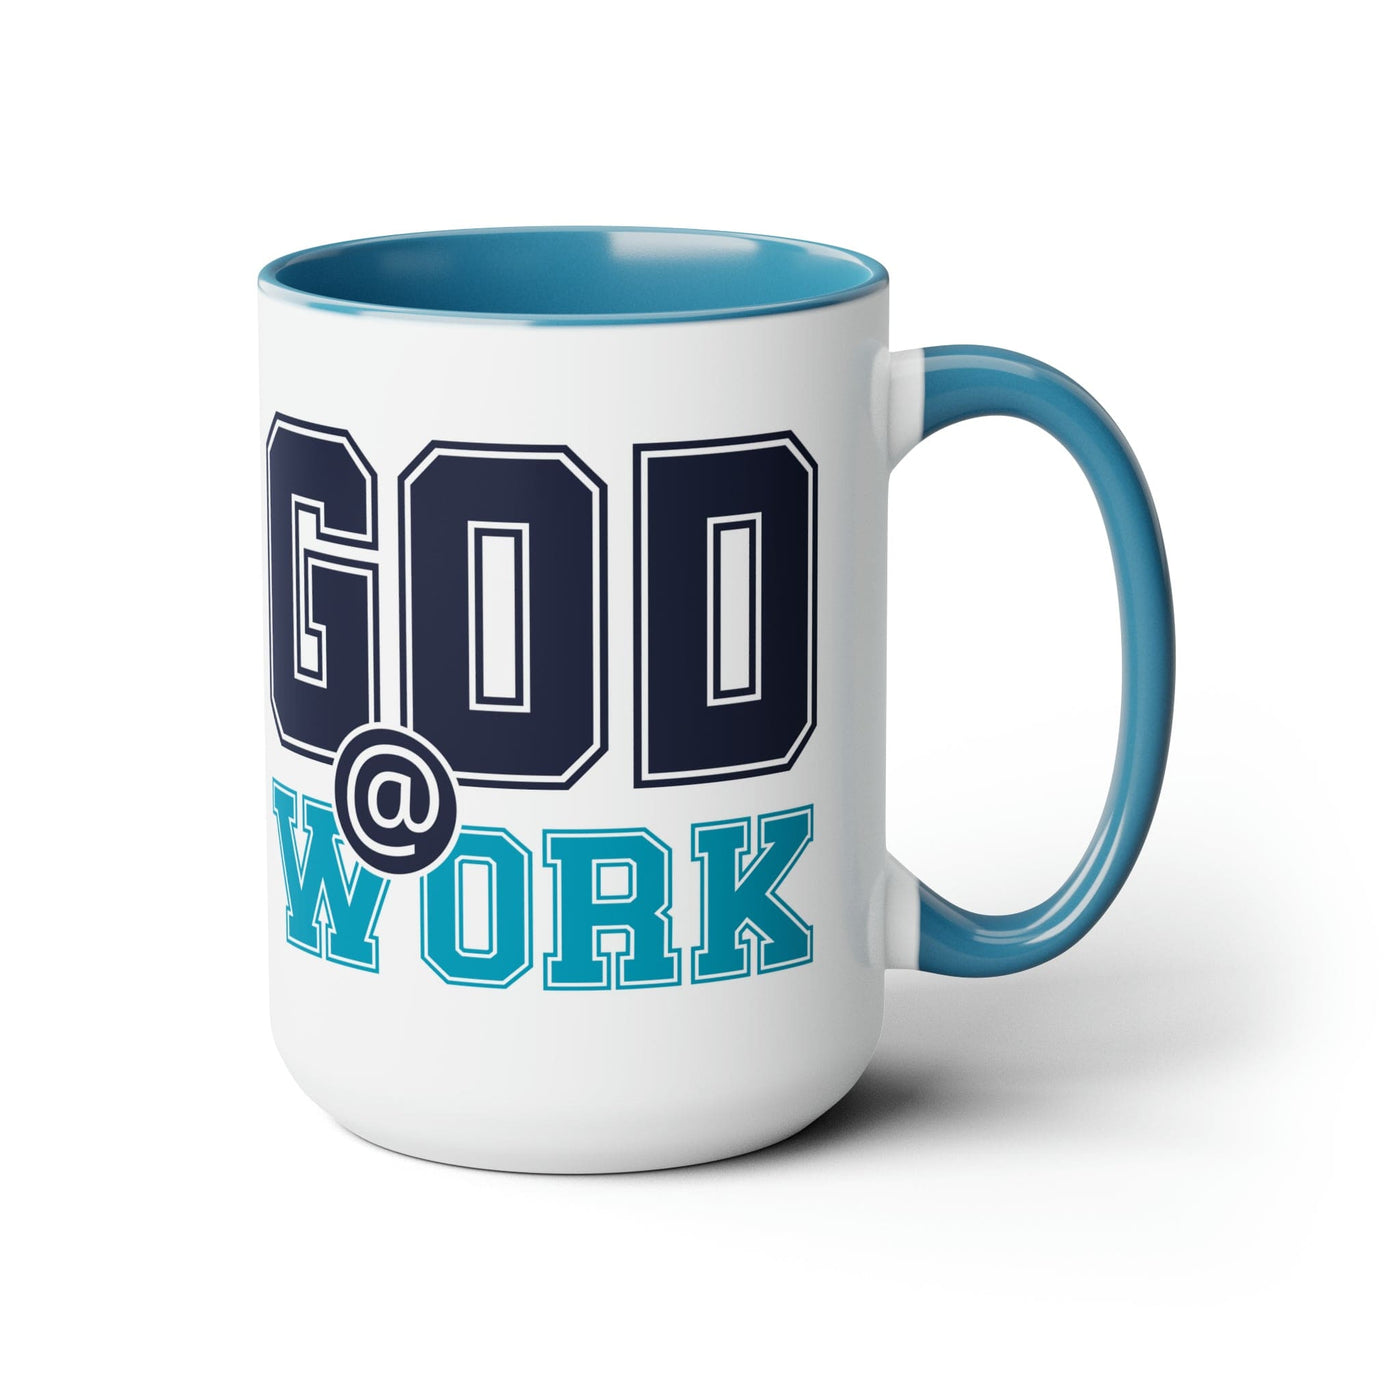 Accent Ceramic Coffee Mug 15oz - God @ Work Navy Blue And Blue Green Print -